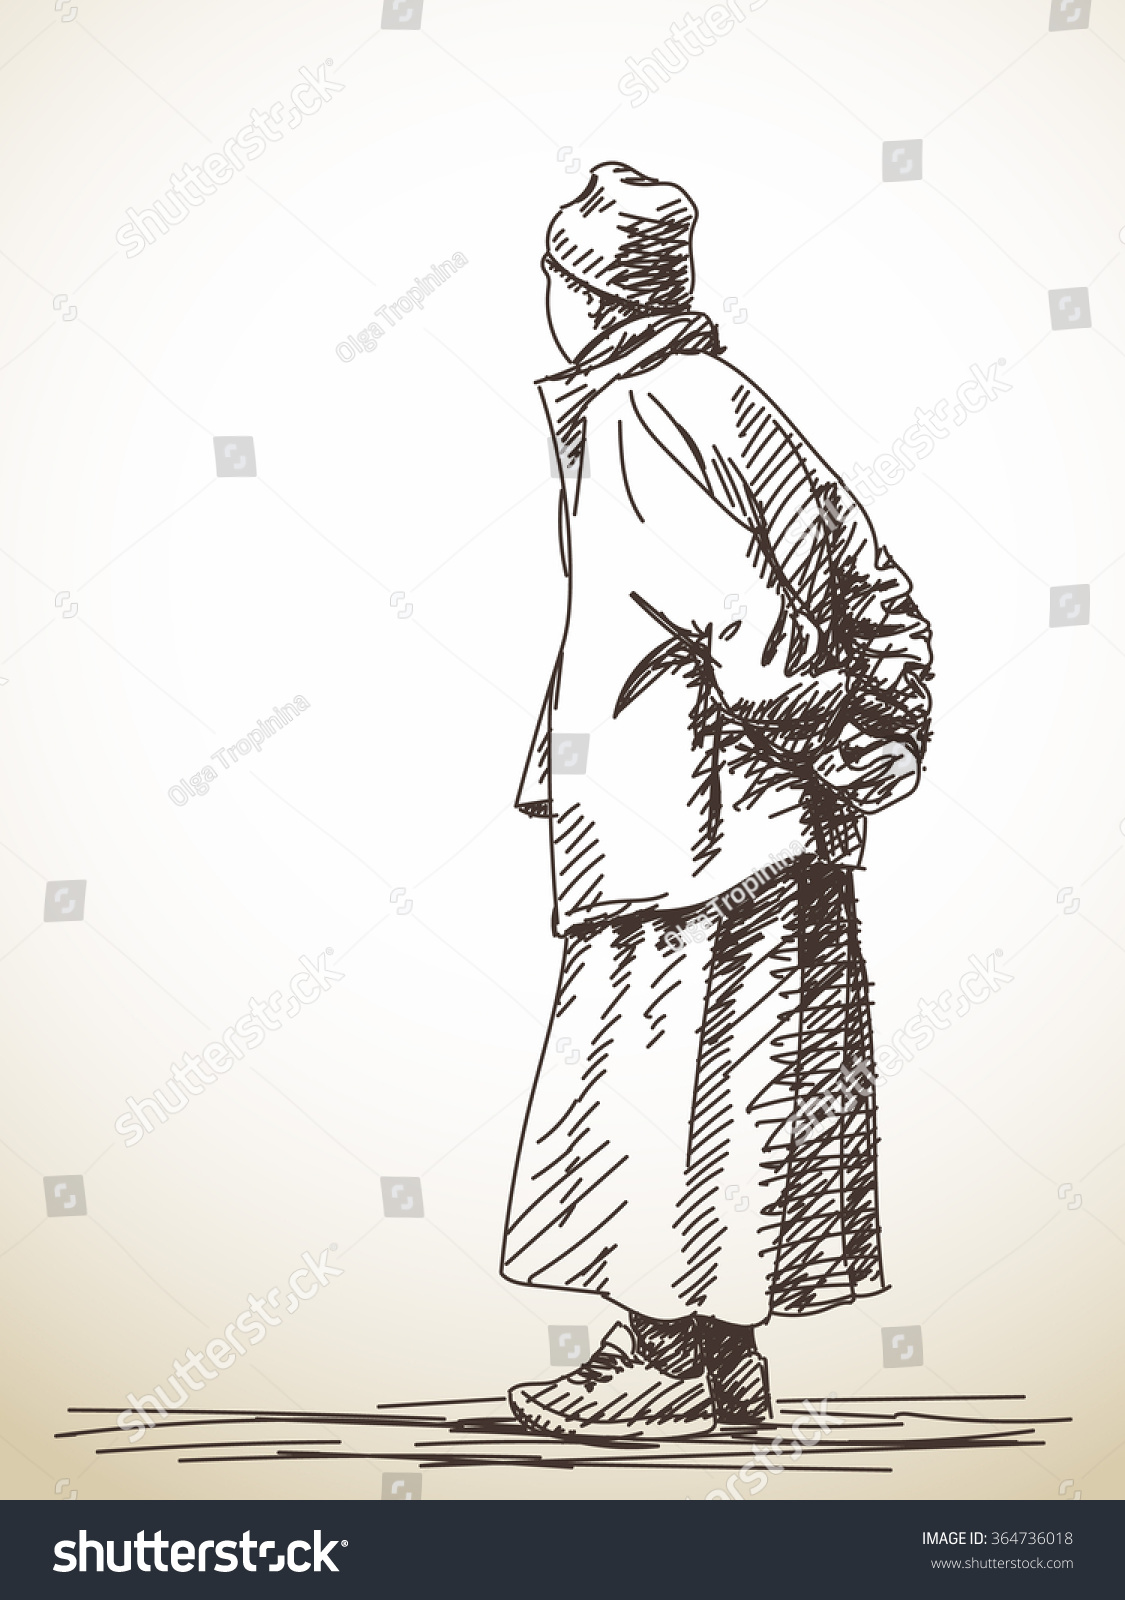 Sketch Of Tibetan Man From Back, Hand Drawn Illustration - 364736018 ...